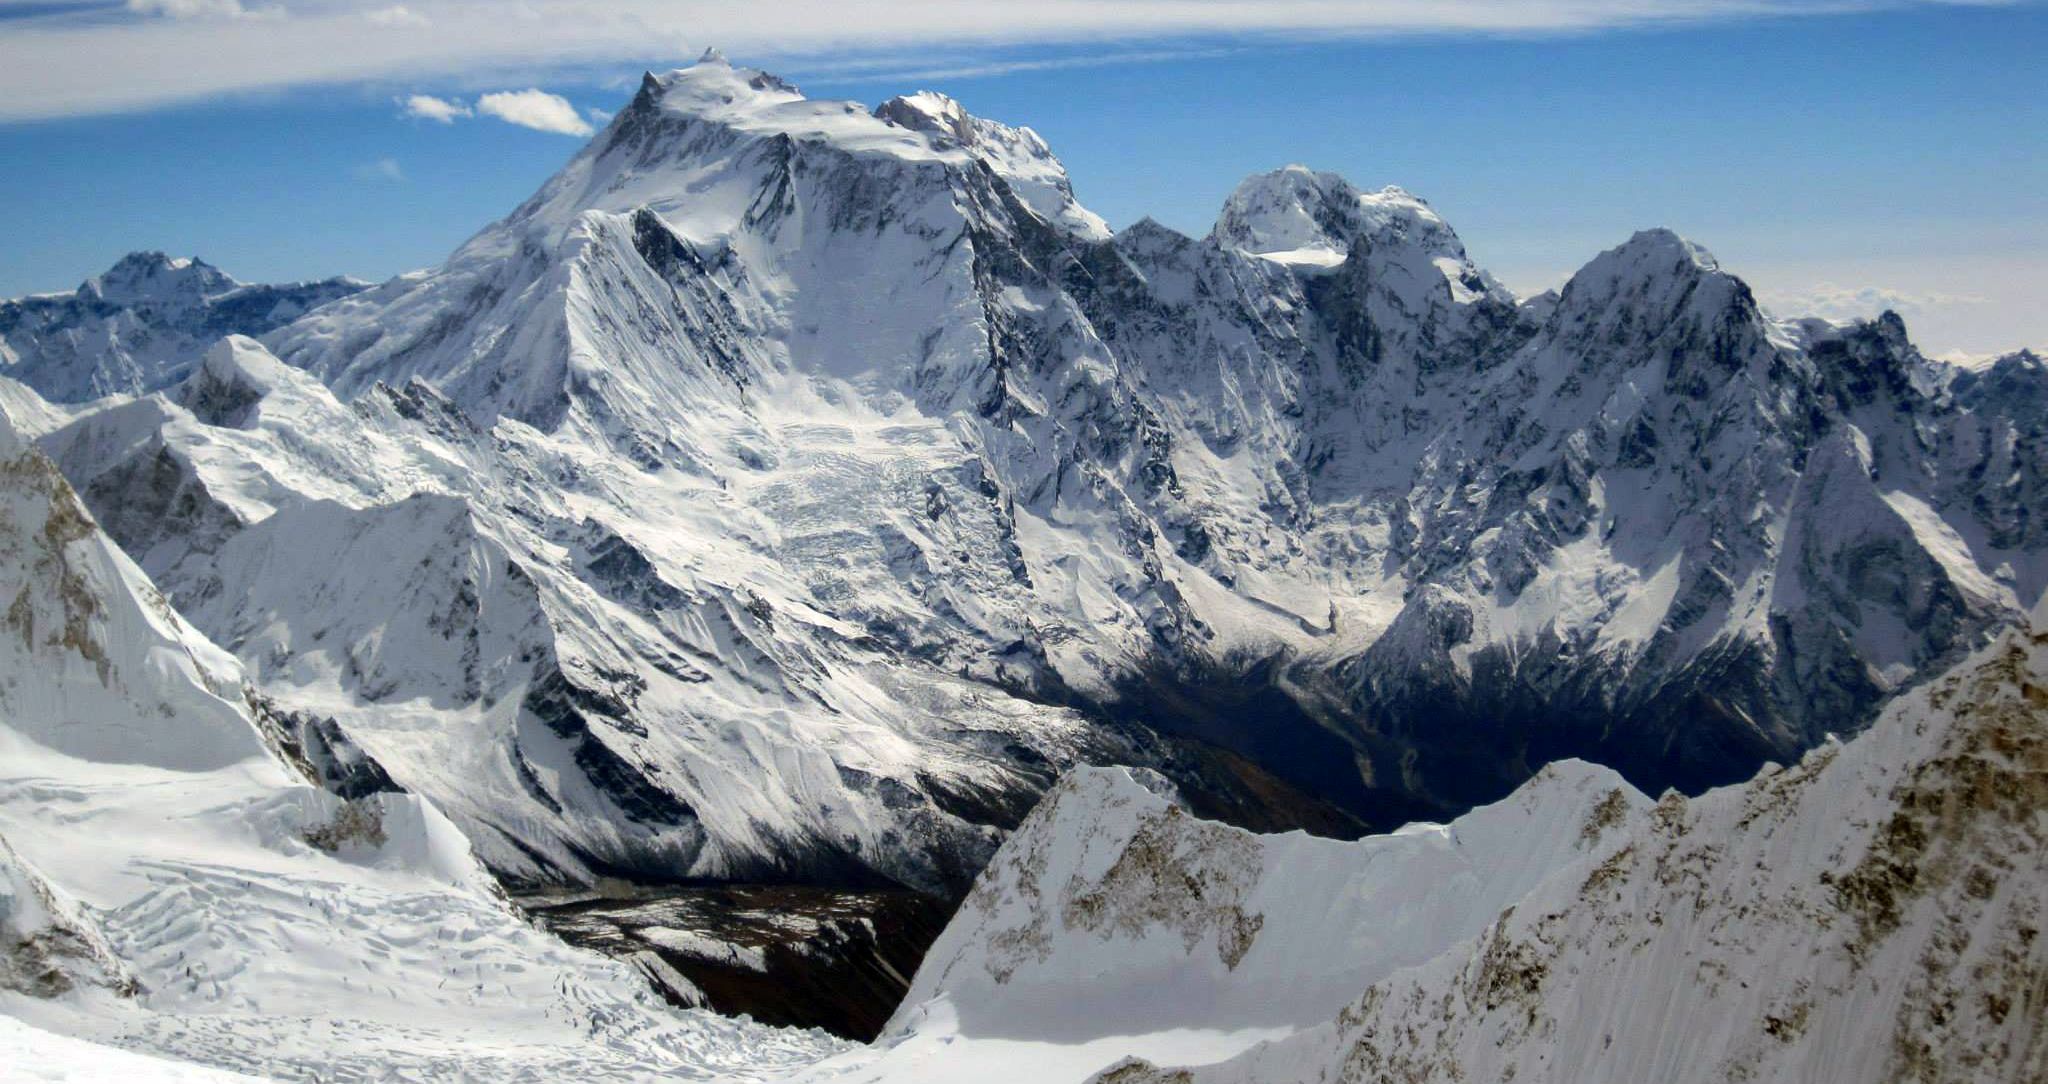 Mount Manaslu from Himlung Himal